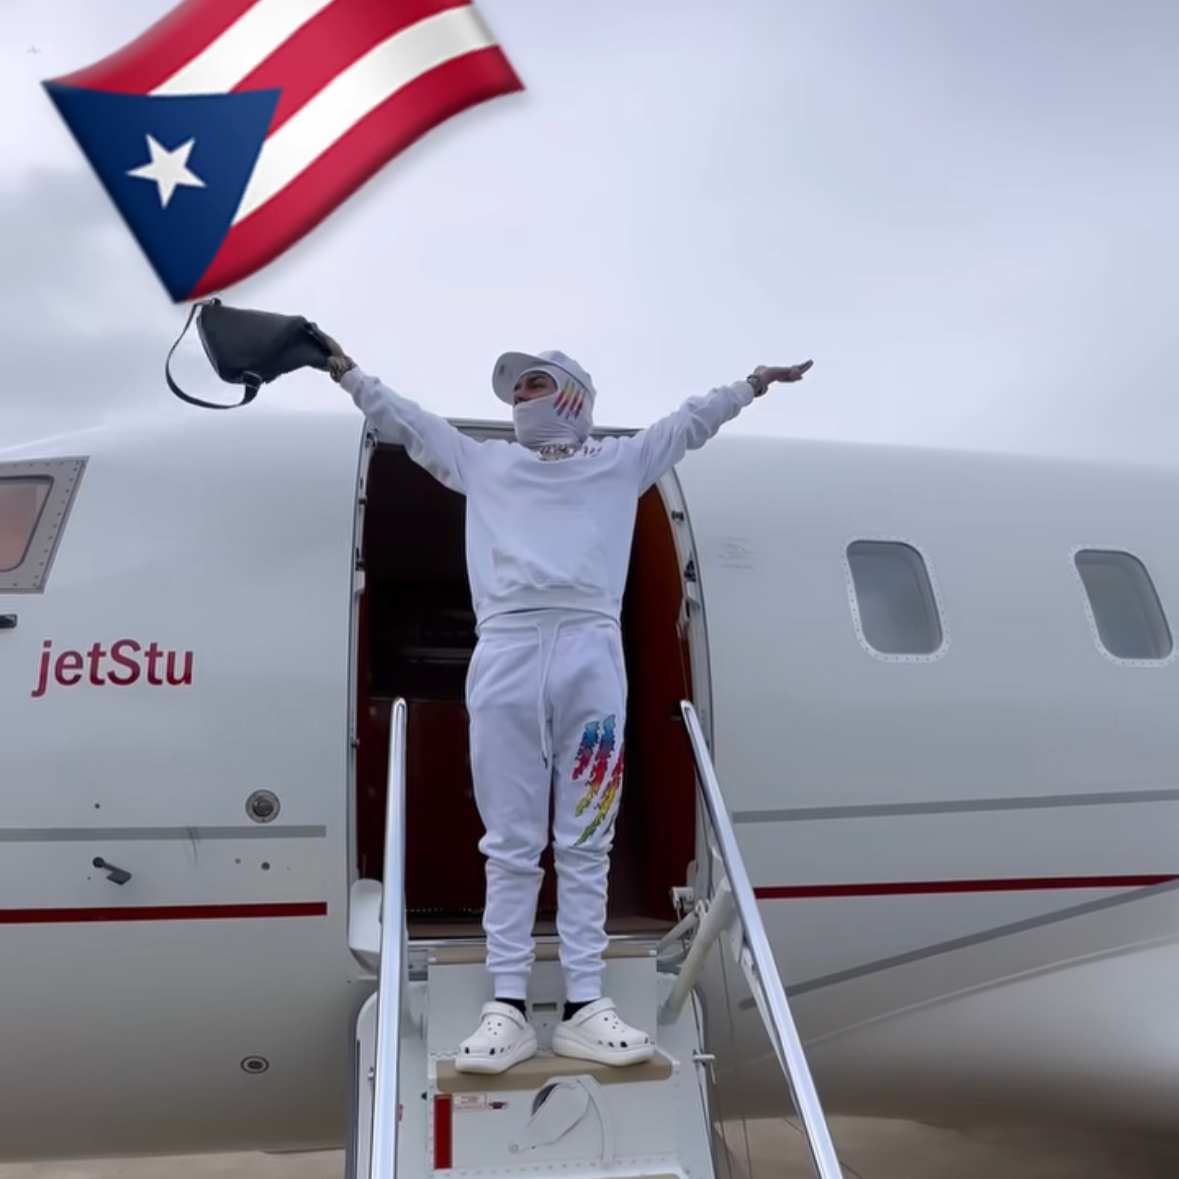 6ix9ine Porto Rico